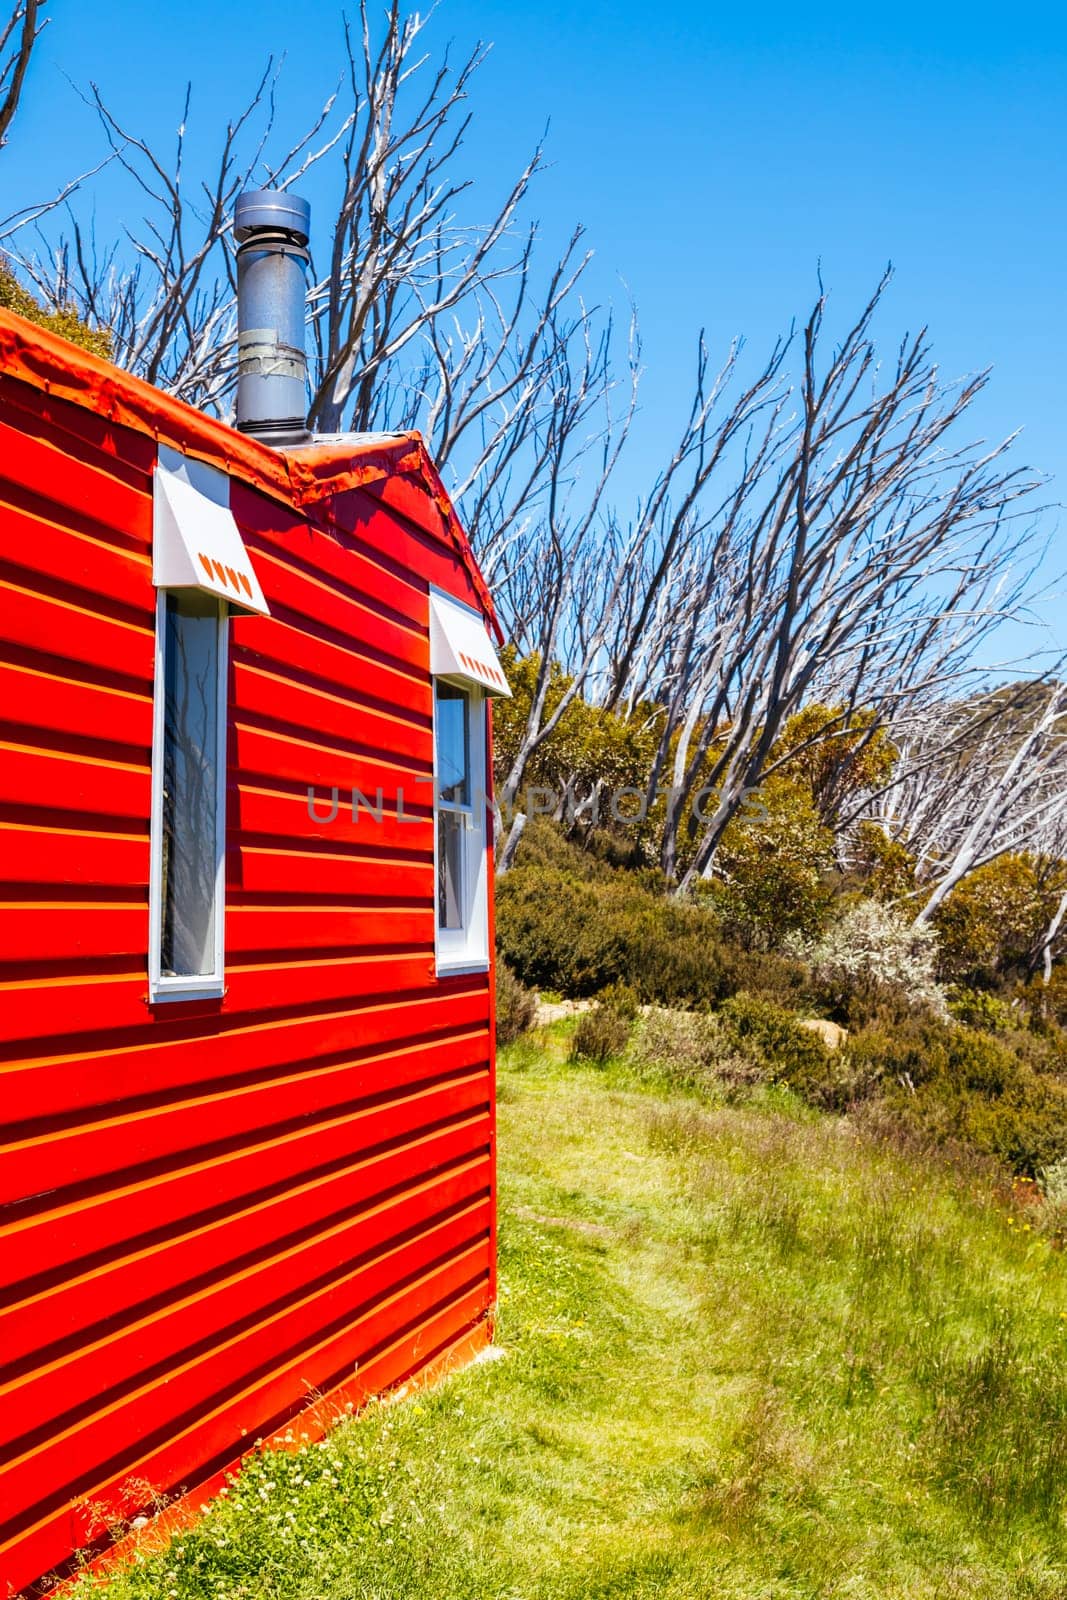 Valentine Hut in Kosciuszko National Park in Australia by FiledIMAGE